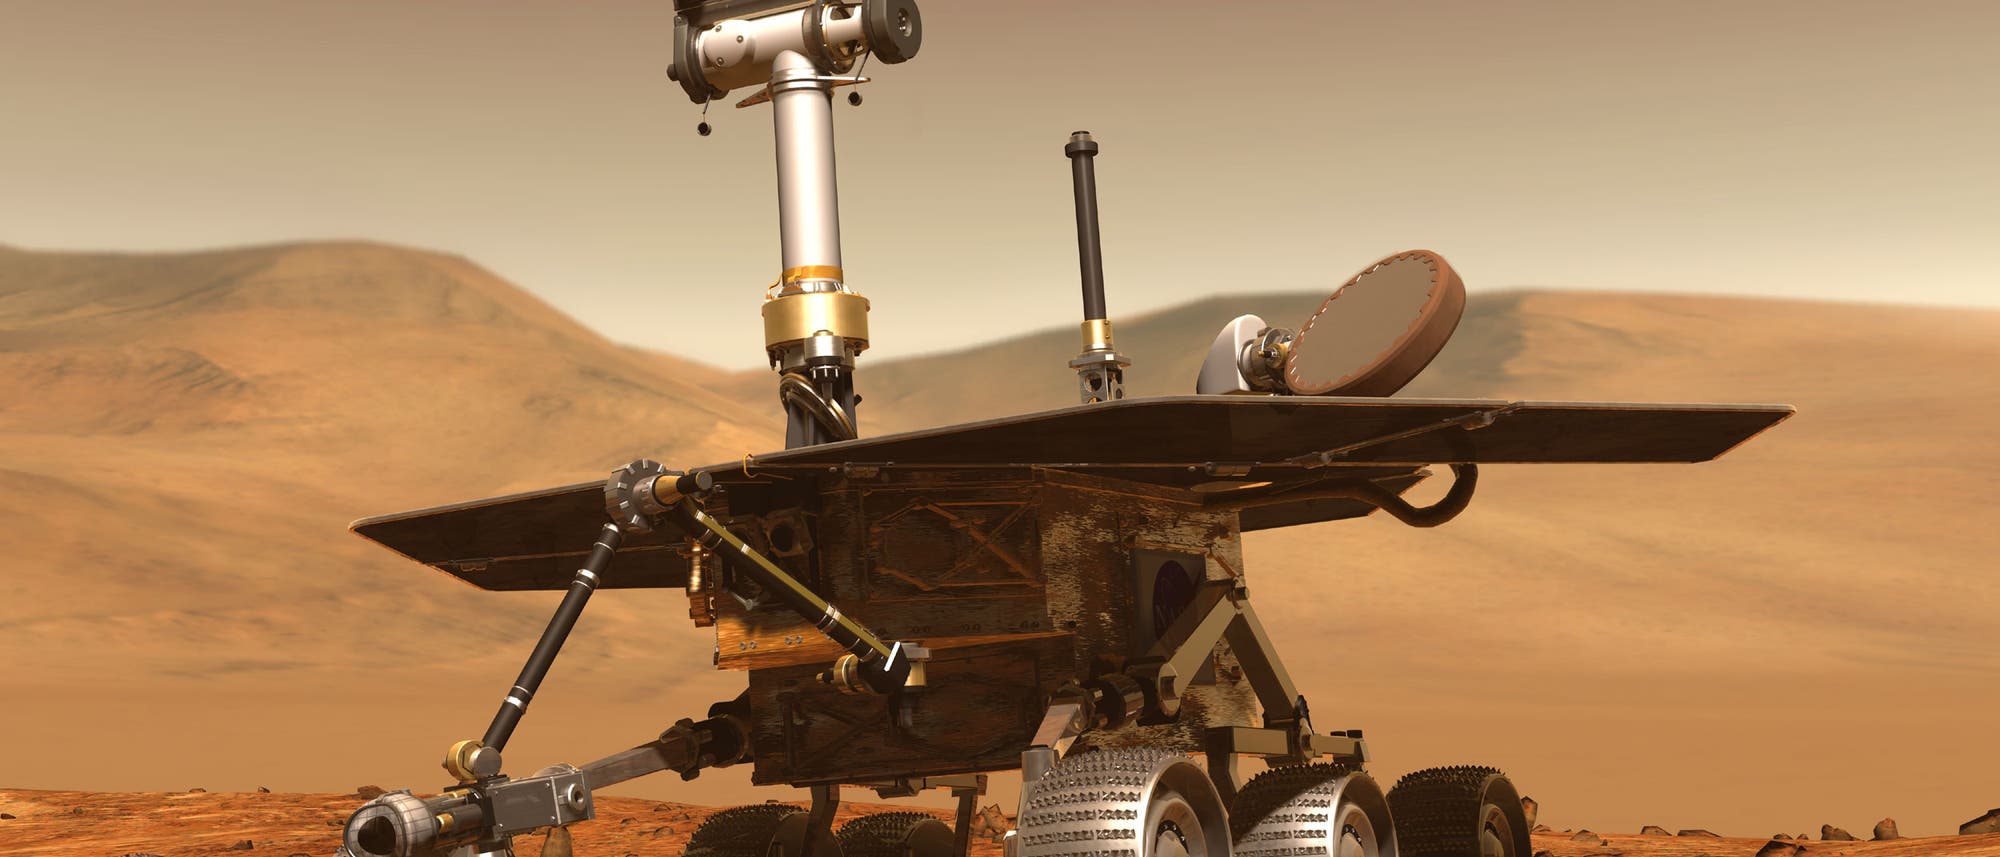 Marsrover Opportunity